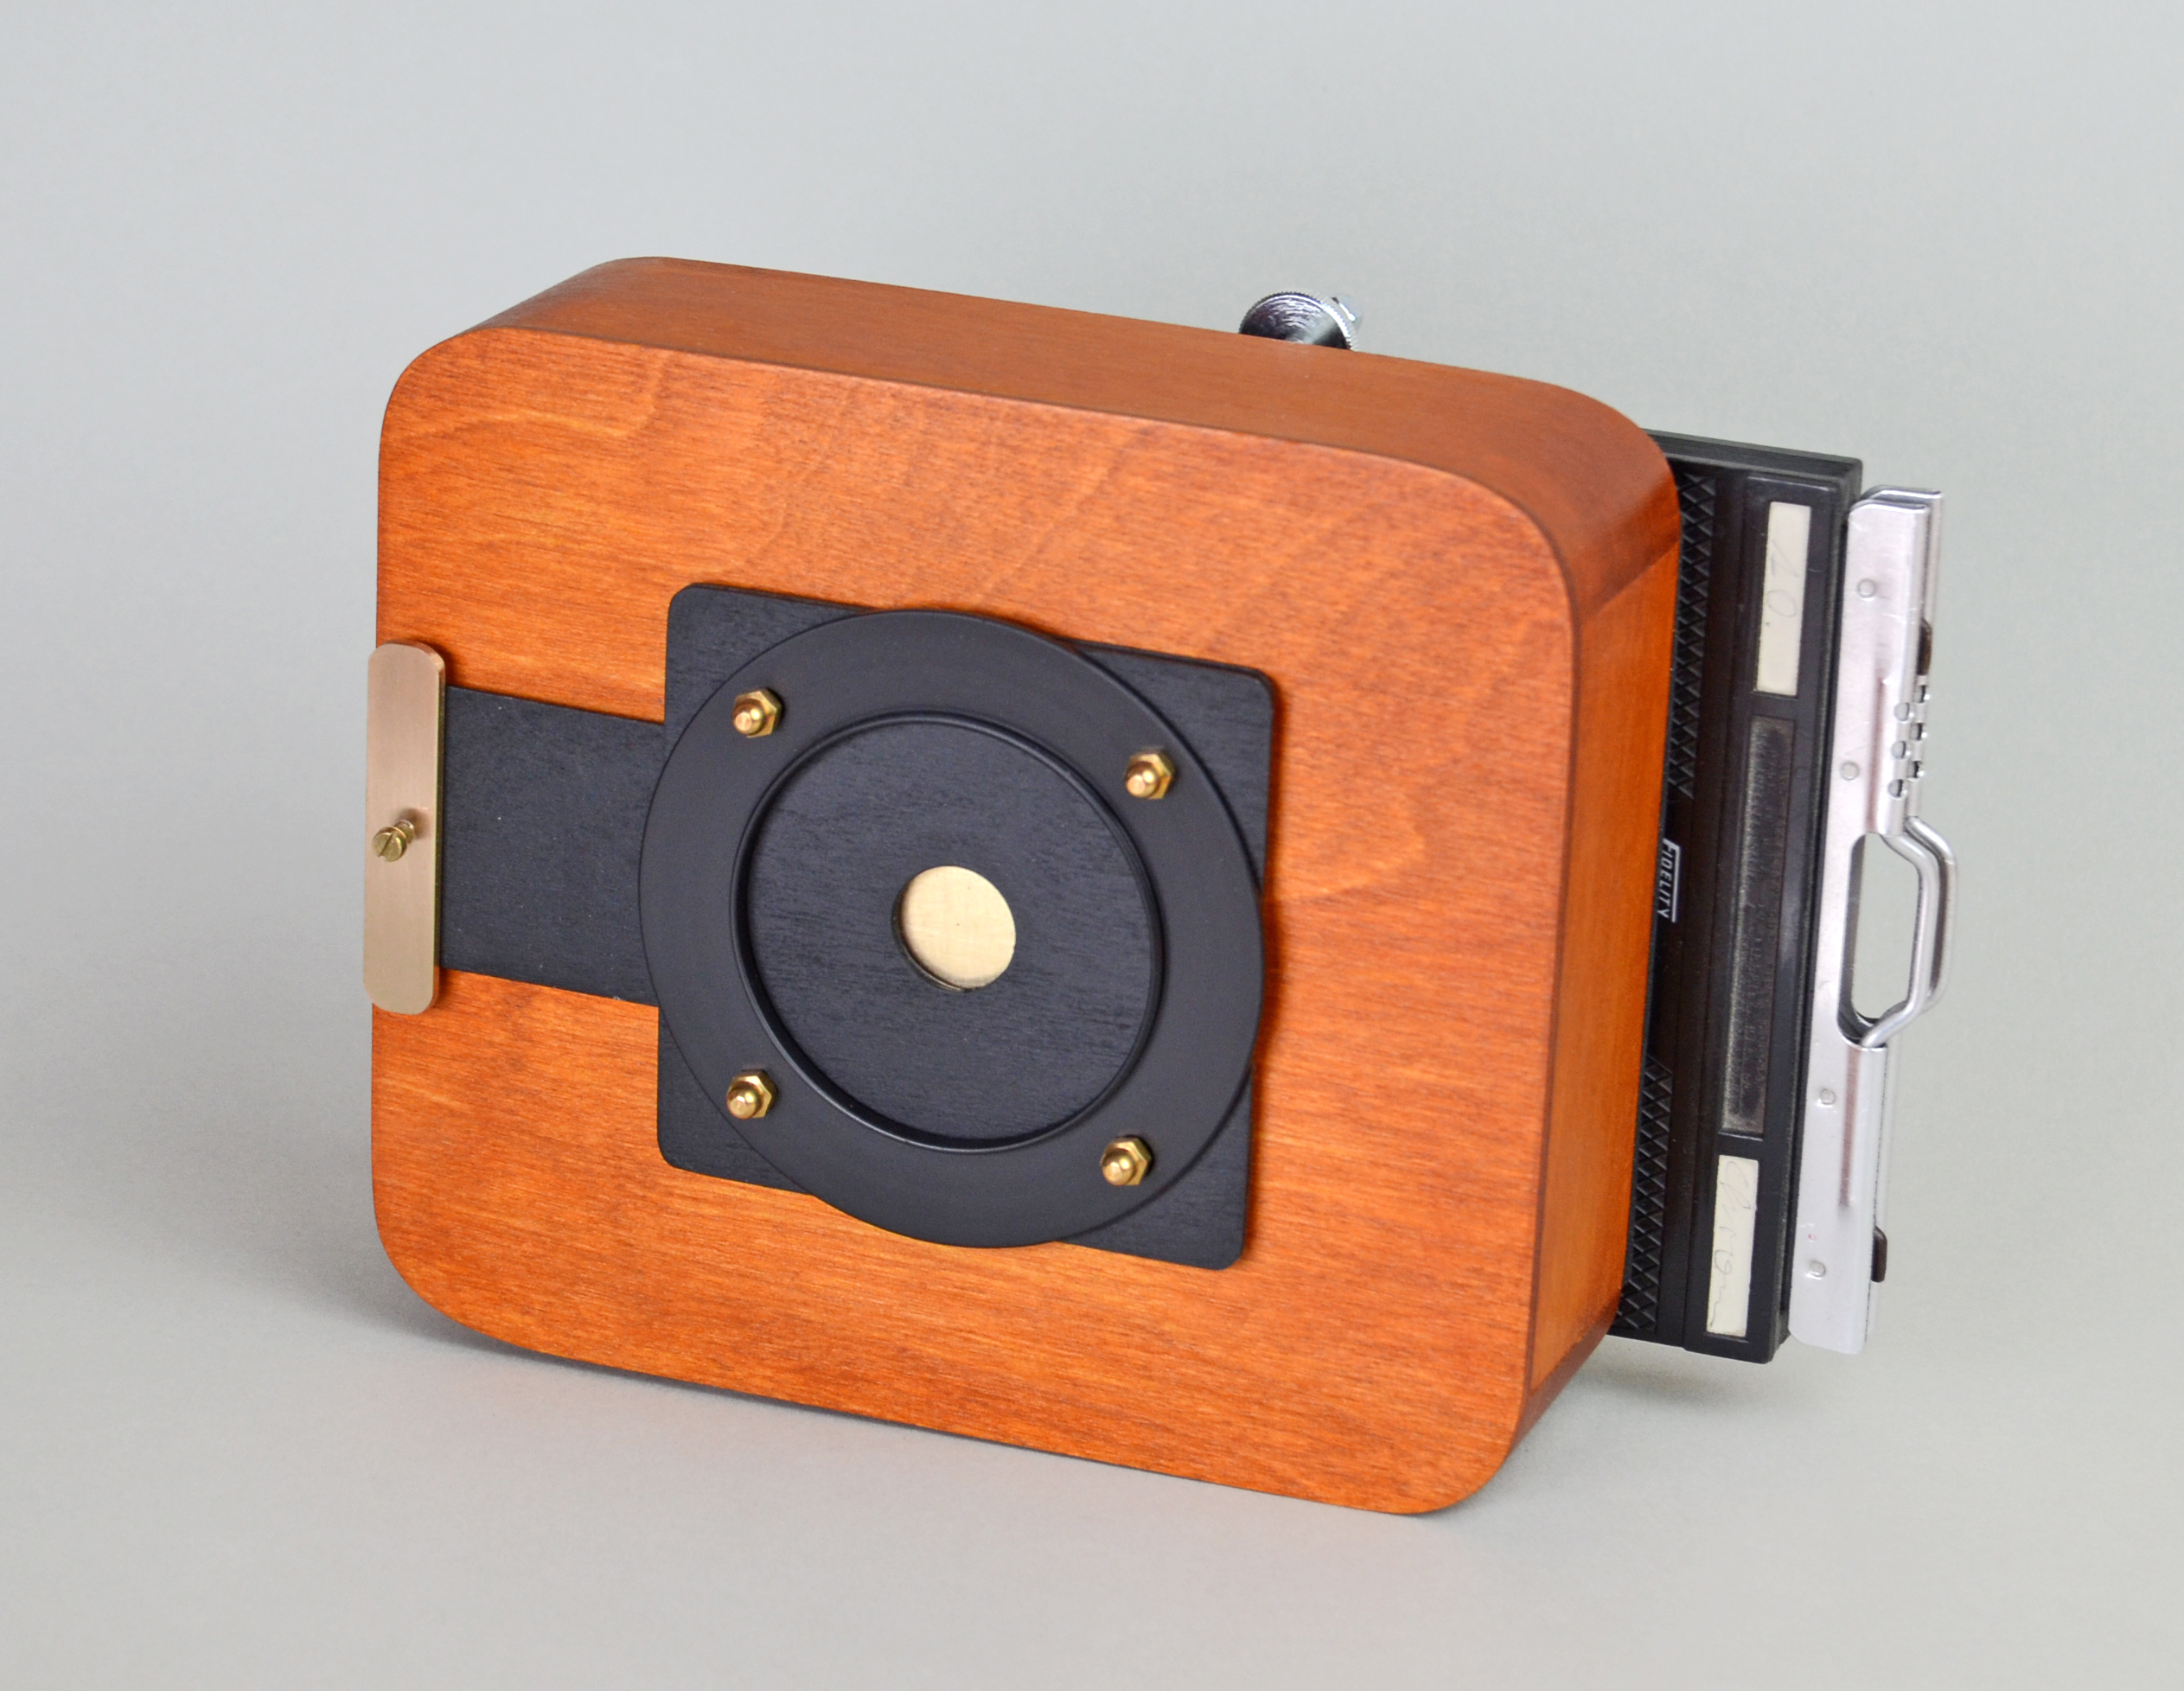 4×5 inch pinhole camera